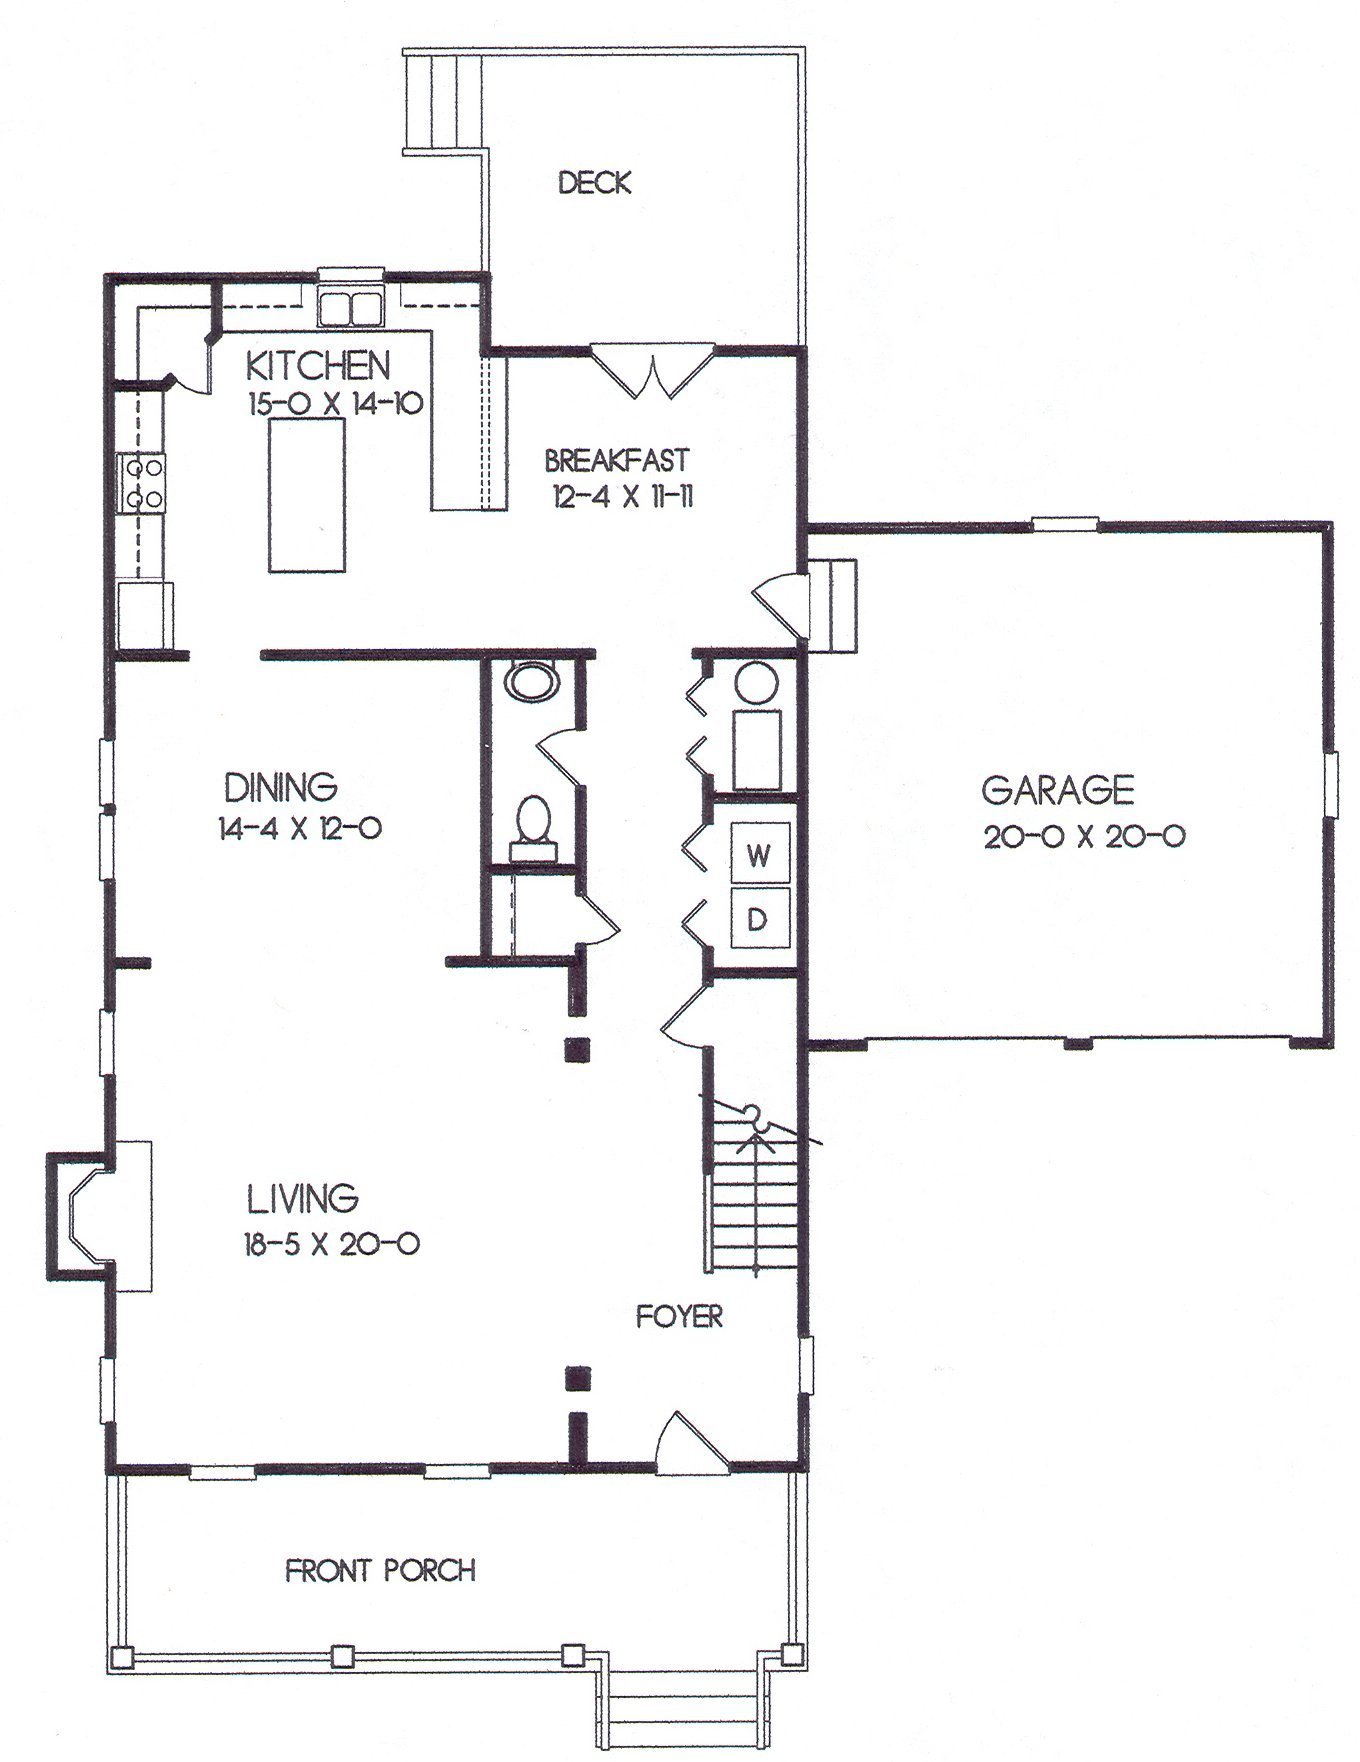 24-42 first floor plan